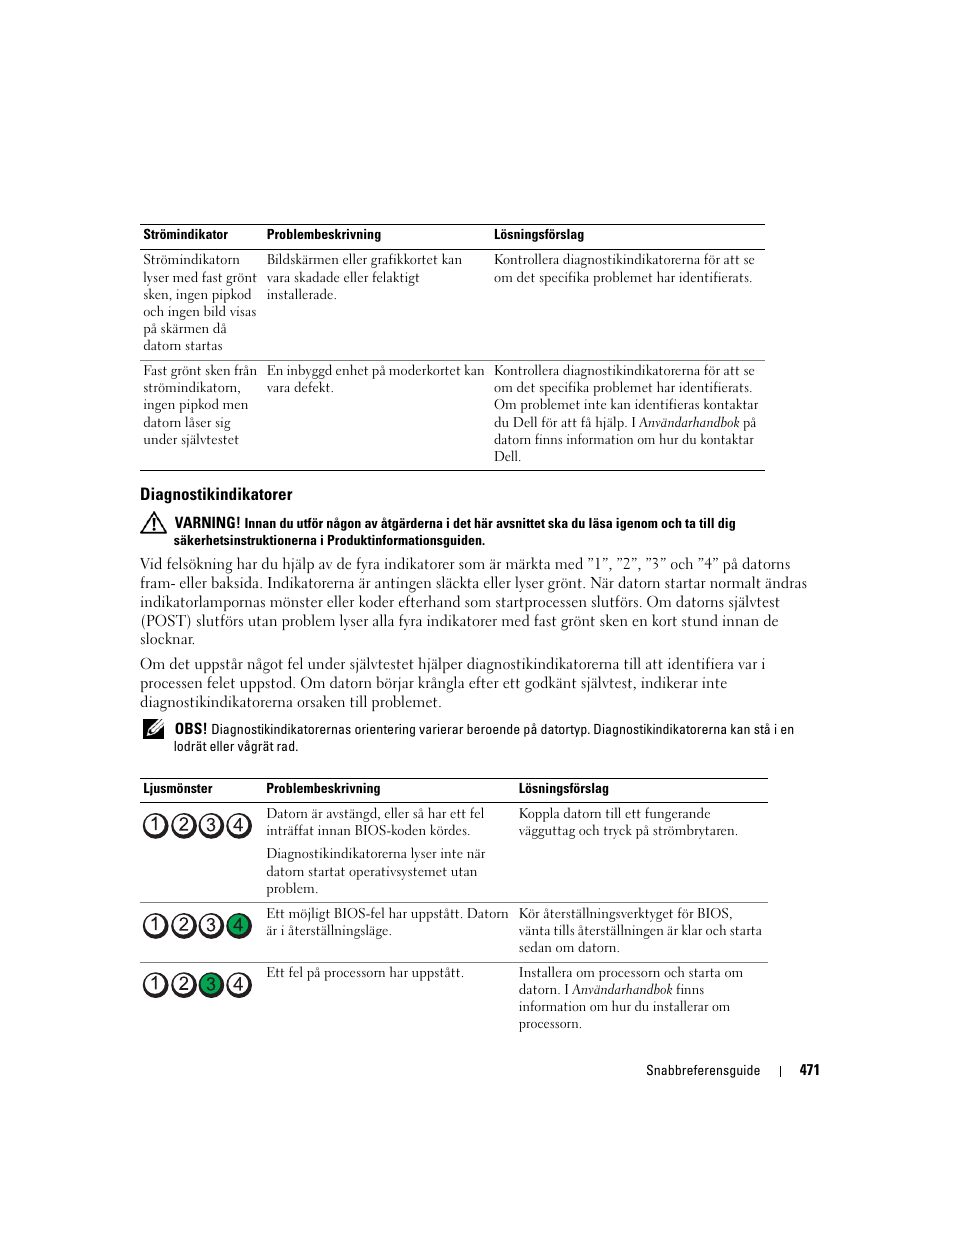 Diagnostikindikatorer, E ”diagnostikindikatorer” på sidan 471) | Инструкция по эксплуатации Dell OptiPlex 745 | Страница 471 / 482